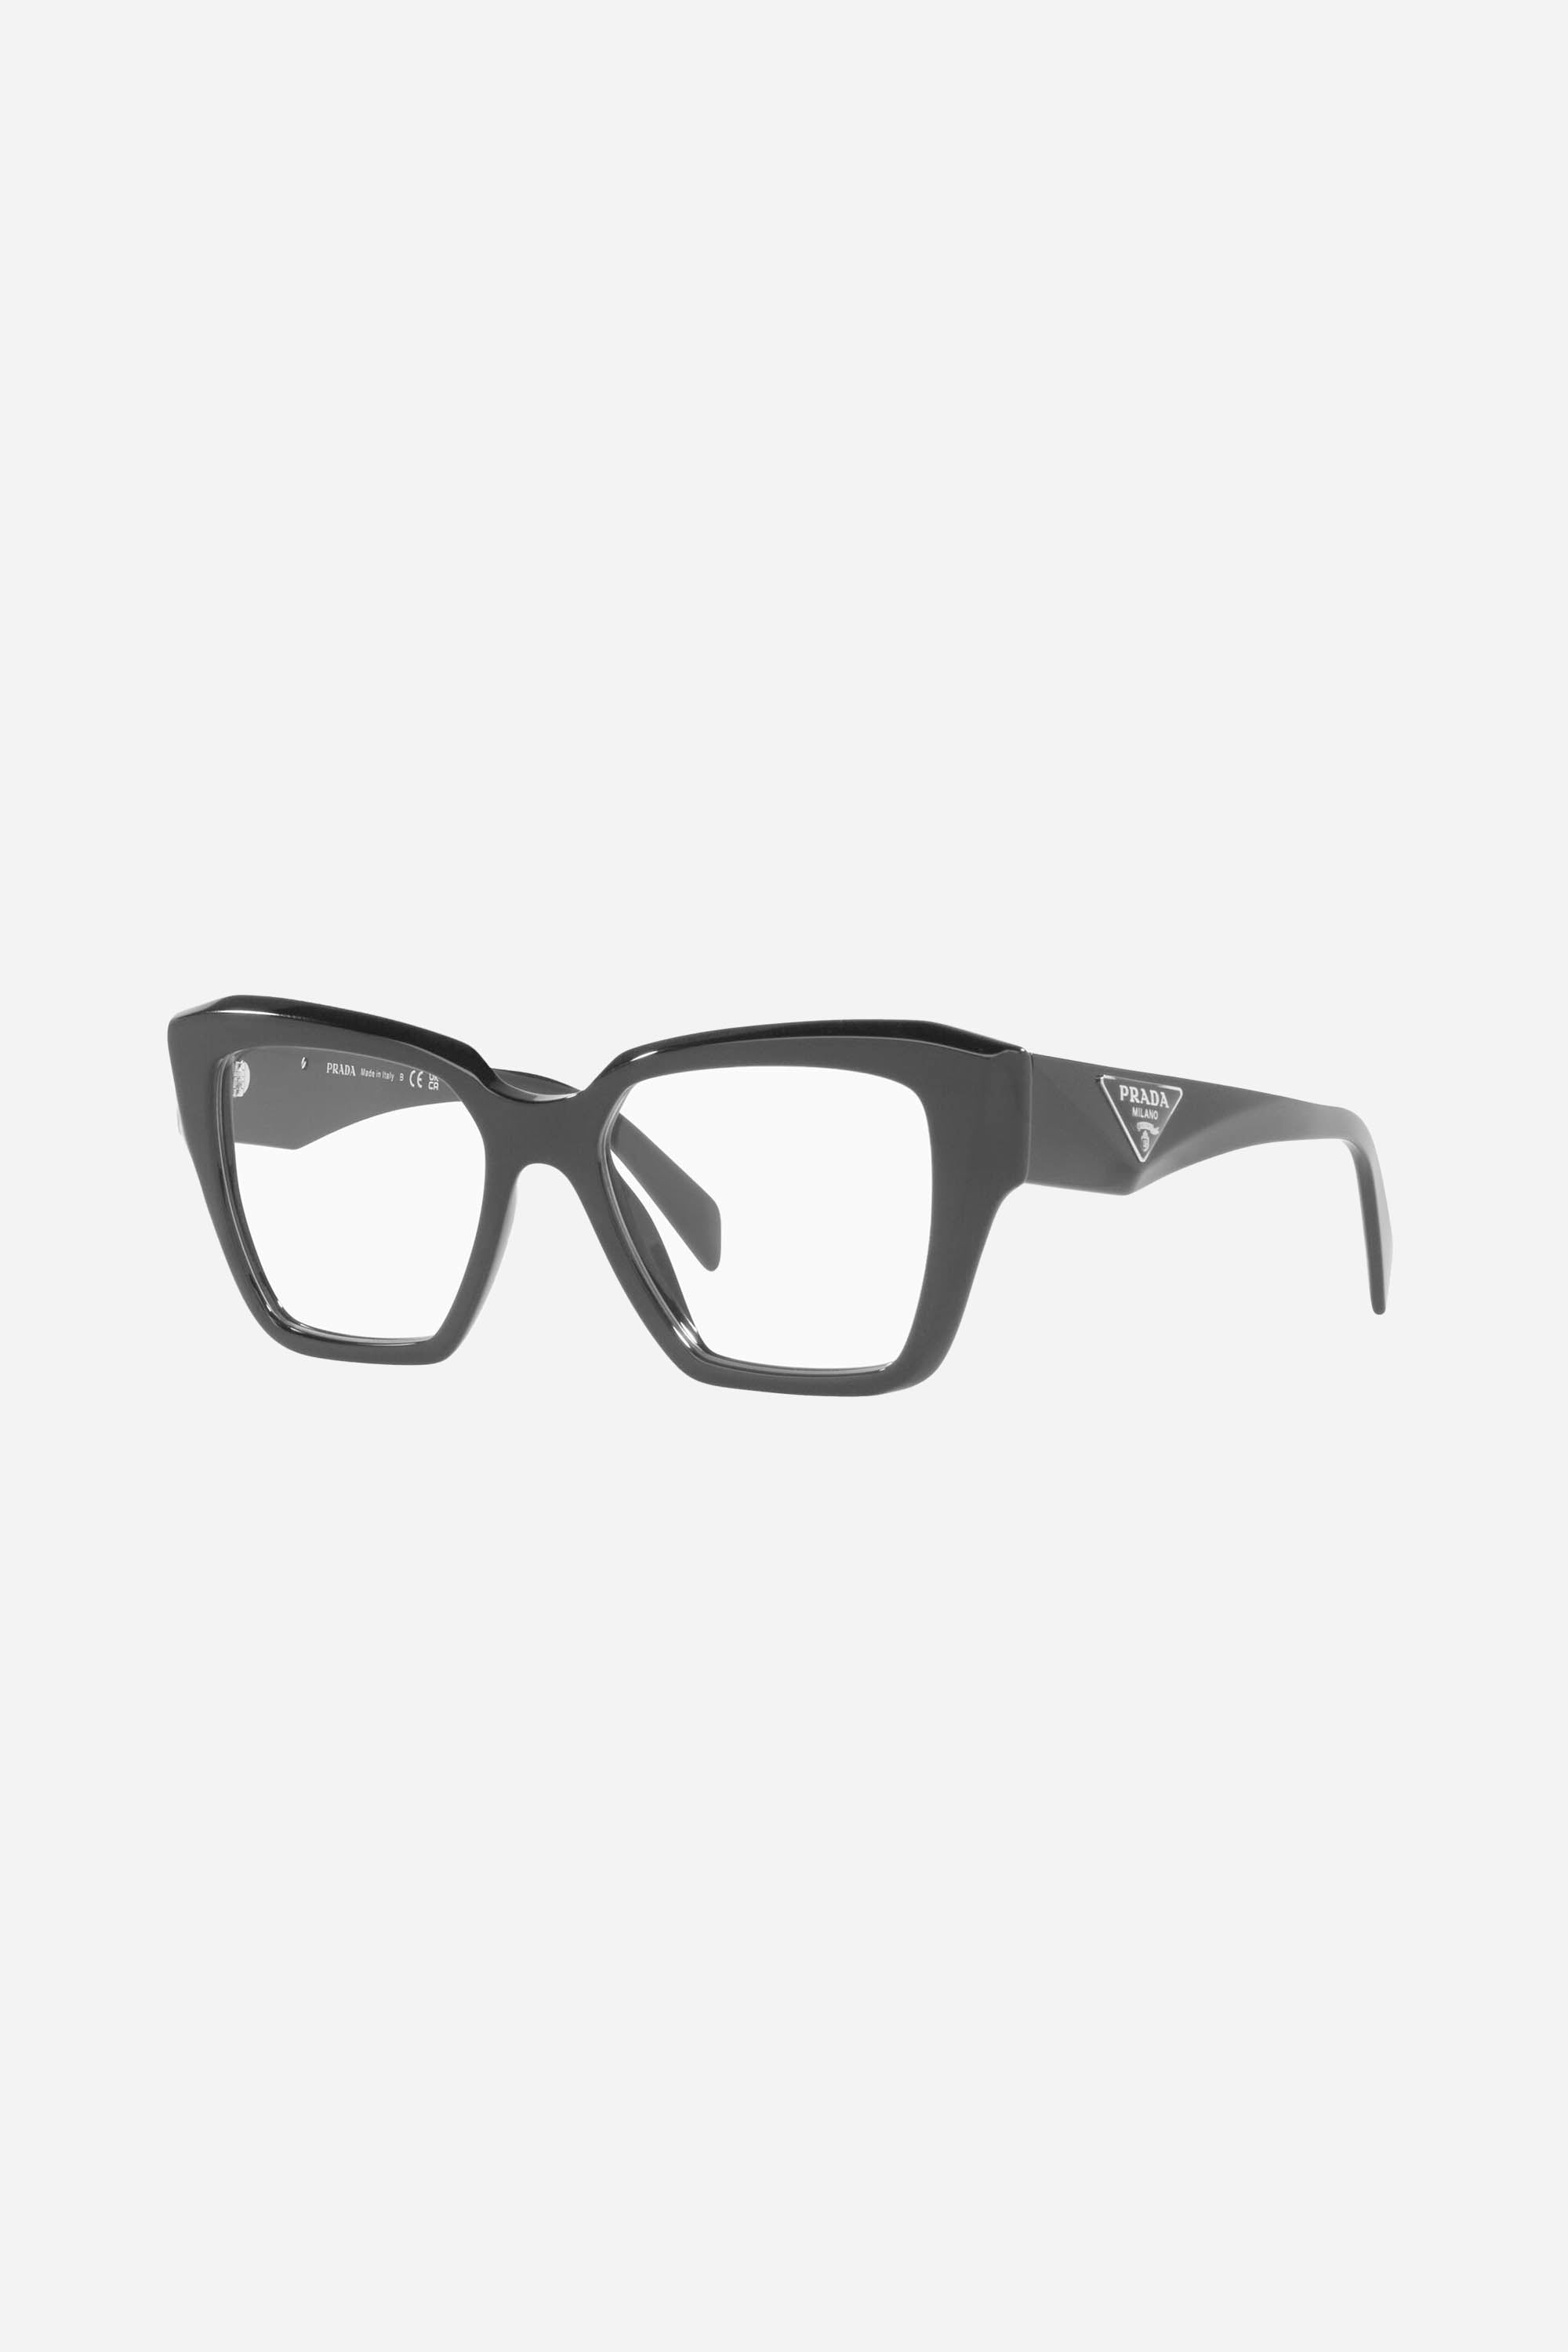 Prada cat eye bold black frame - Eyewear Club